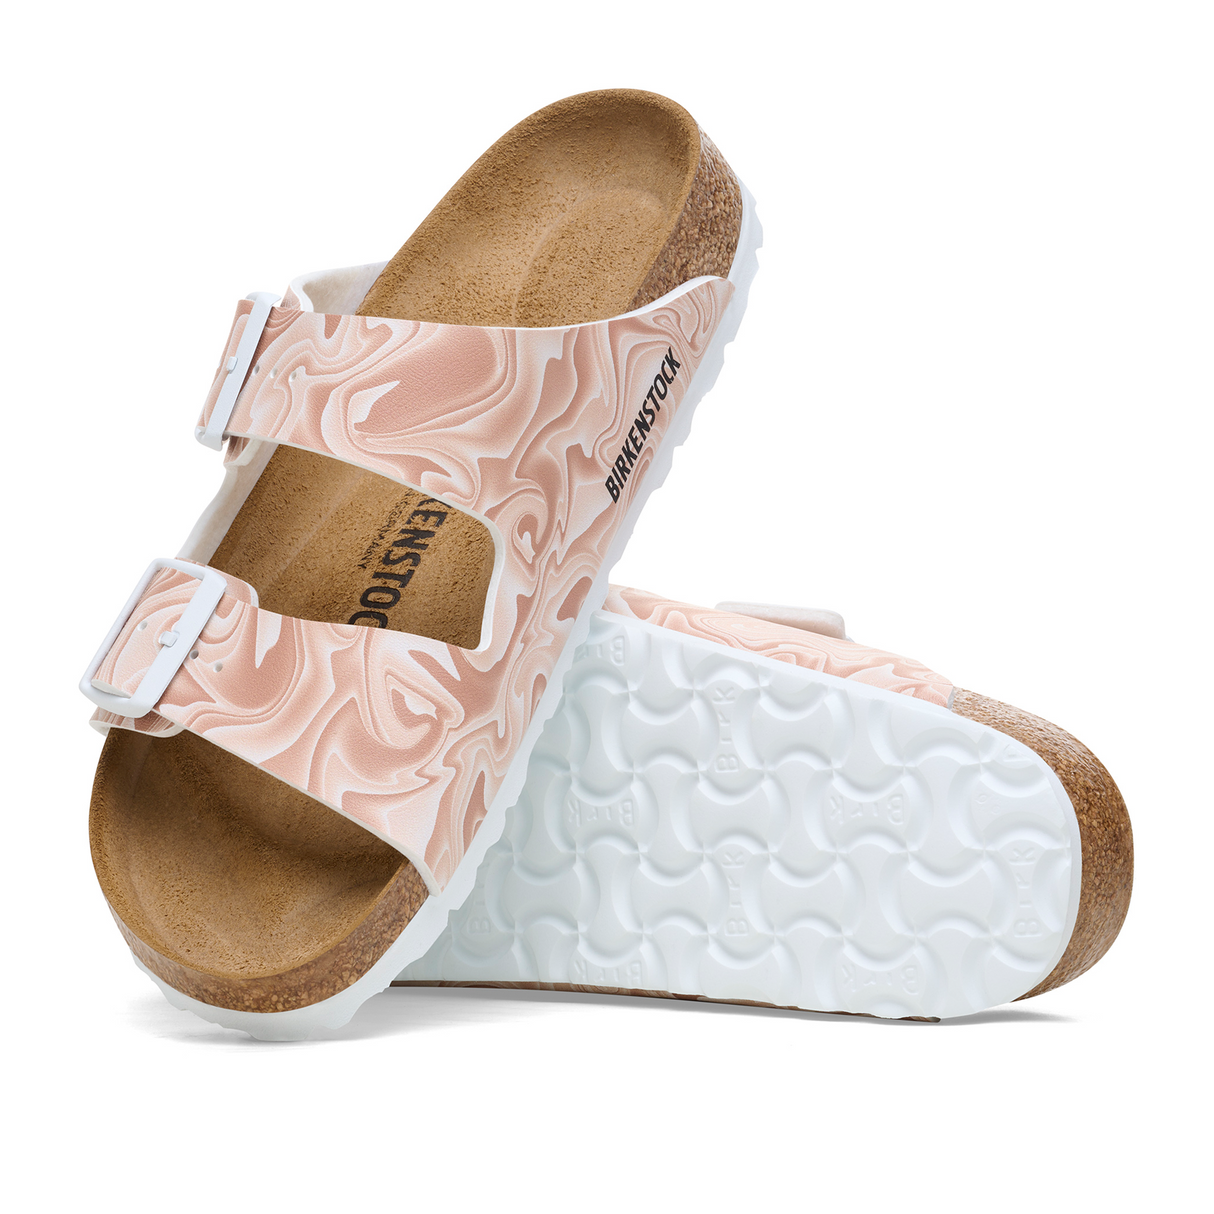 Birkenstock Arizona Grip Birko-Flor Narrow Slide Sandal (Women) - Marble New Beige Sandals - Slide - The Heel Shoe Fitters